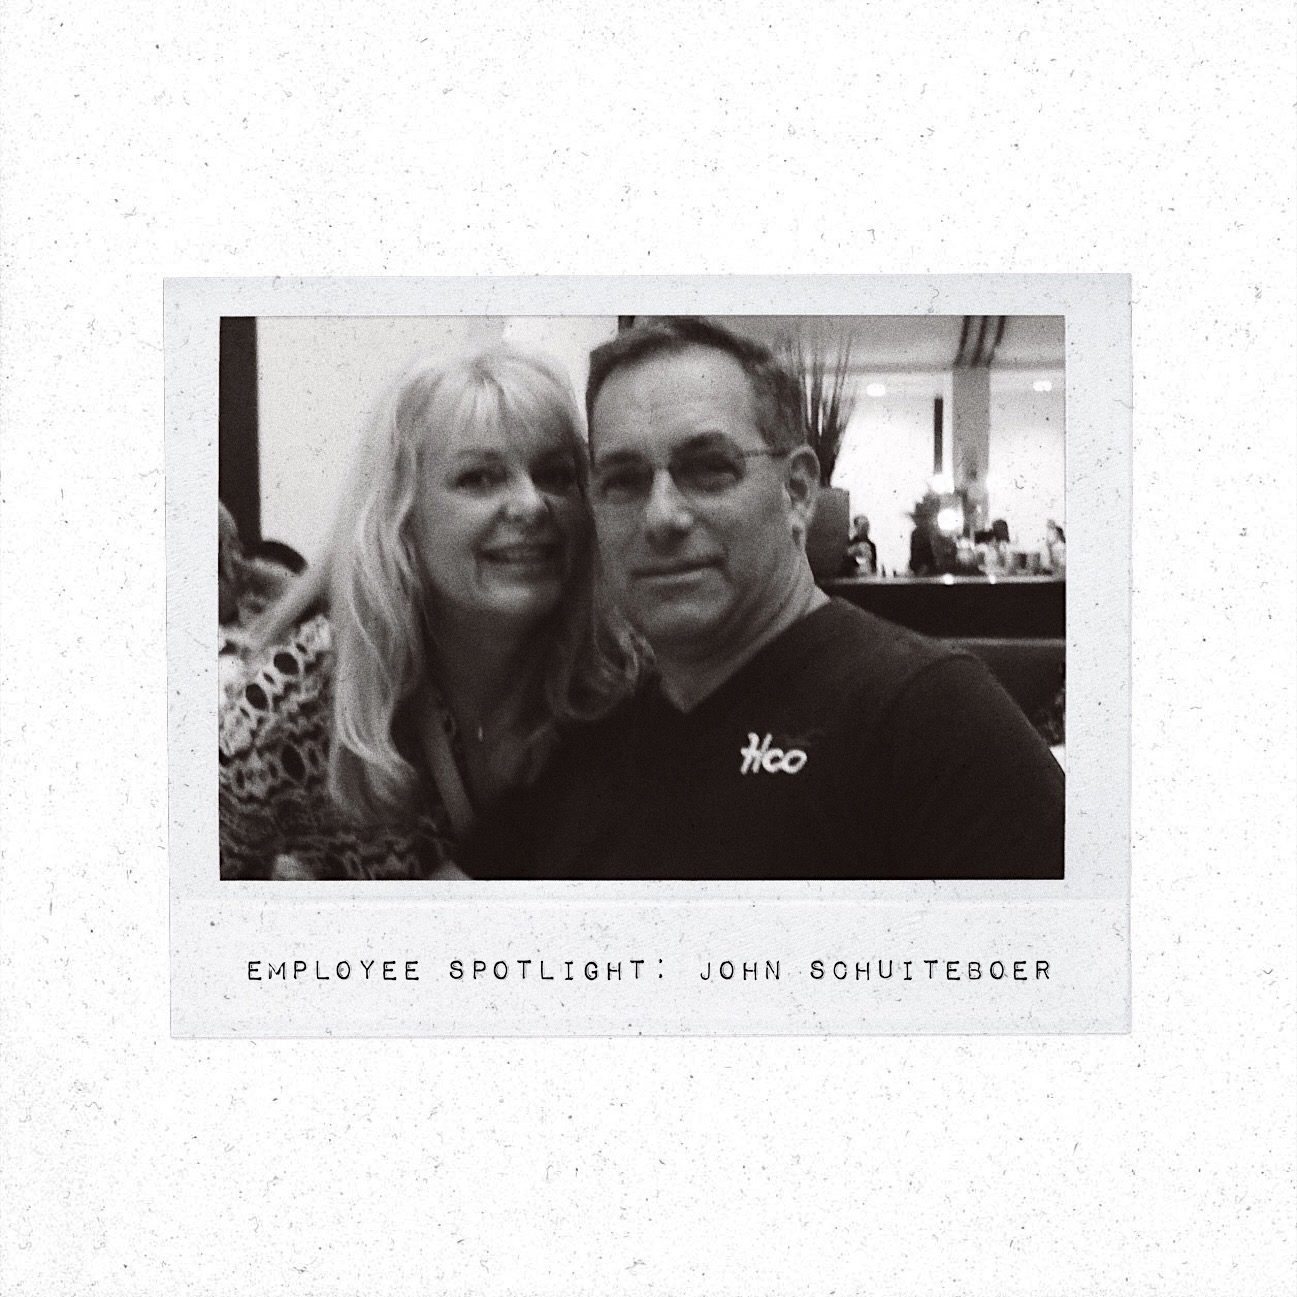 Rogers Spotlight: John Schuiteboer